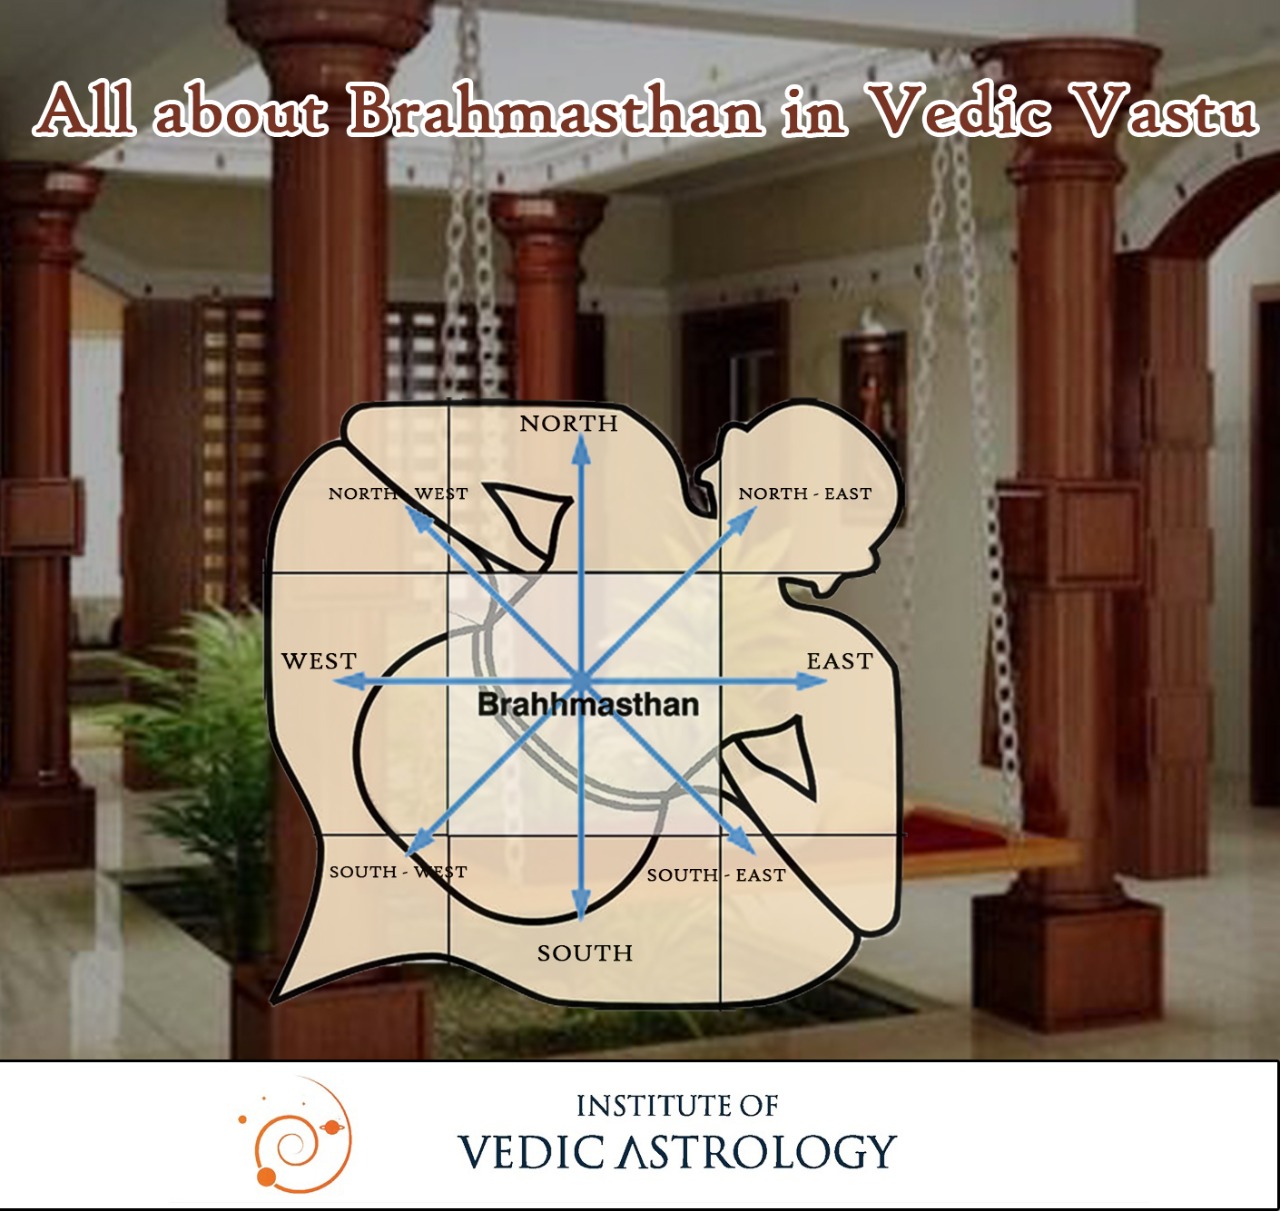 All about Brahmasthan in Vedic Vastu